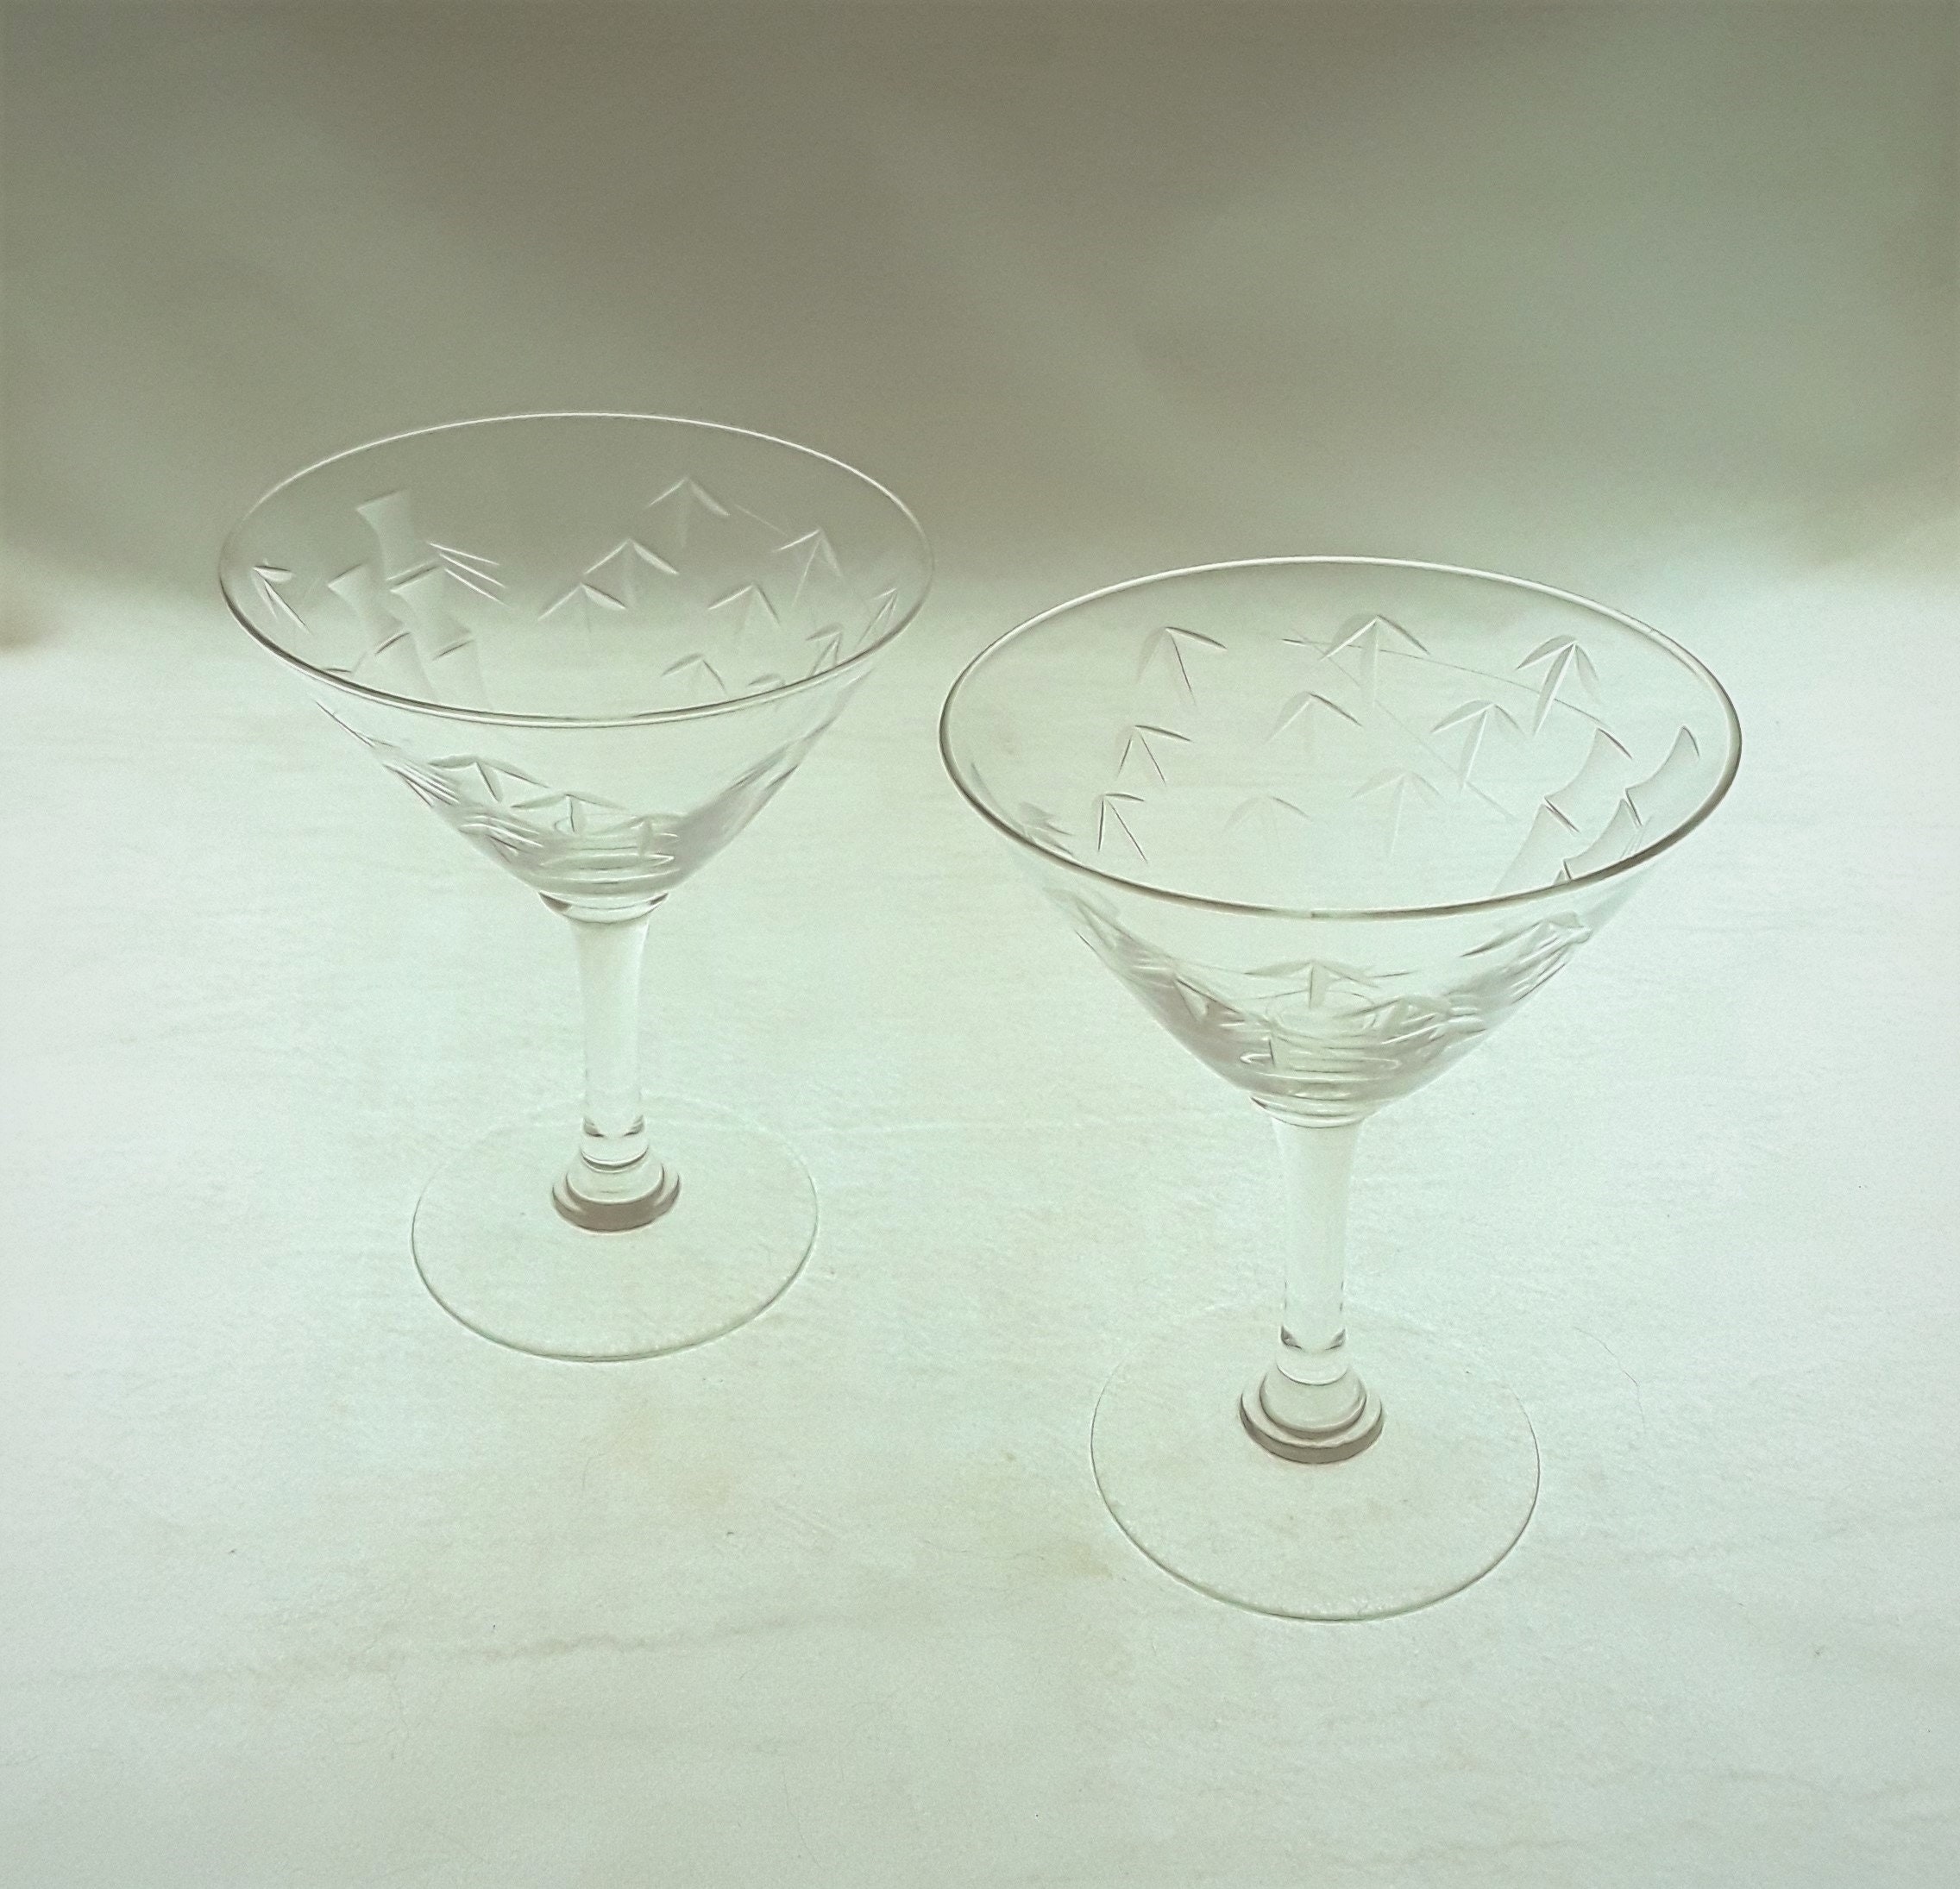 PartyE 2oz Mini Martini Glass - 12ct